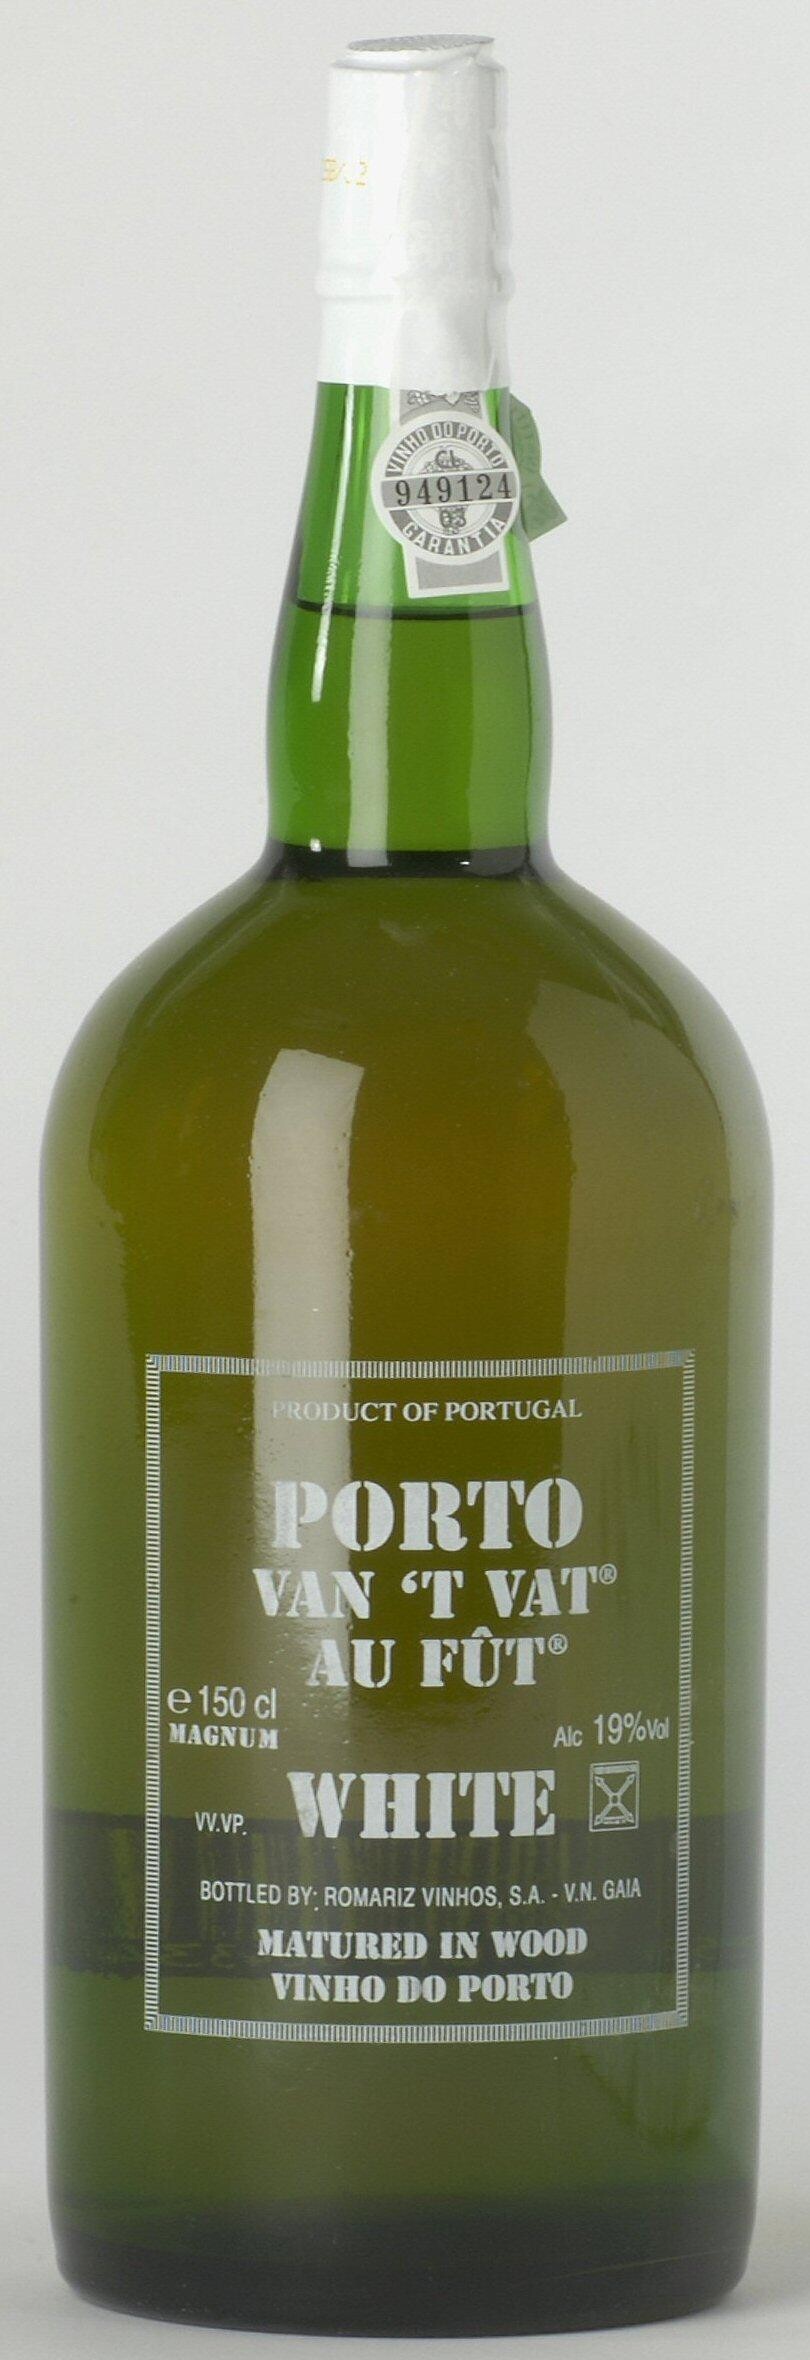 Porto van't vat wit 1.5L 19%